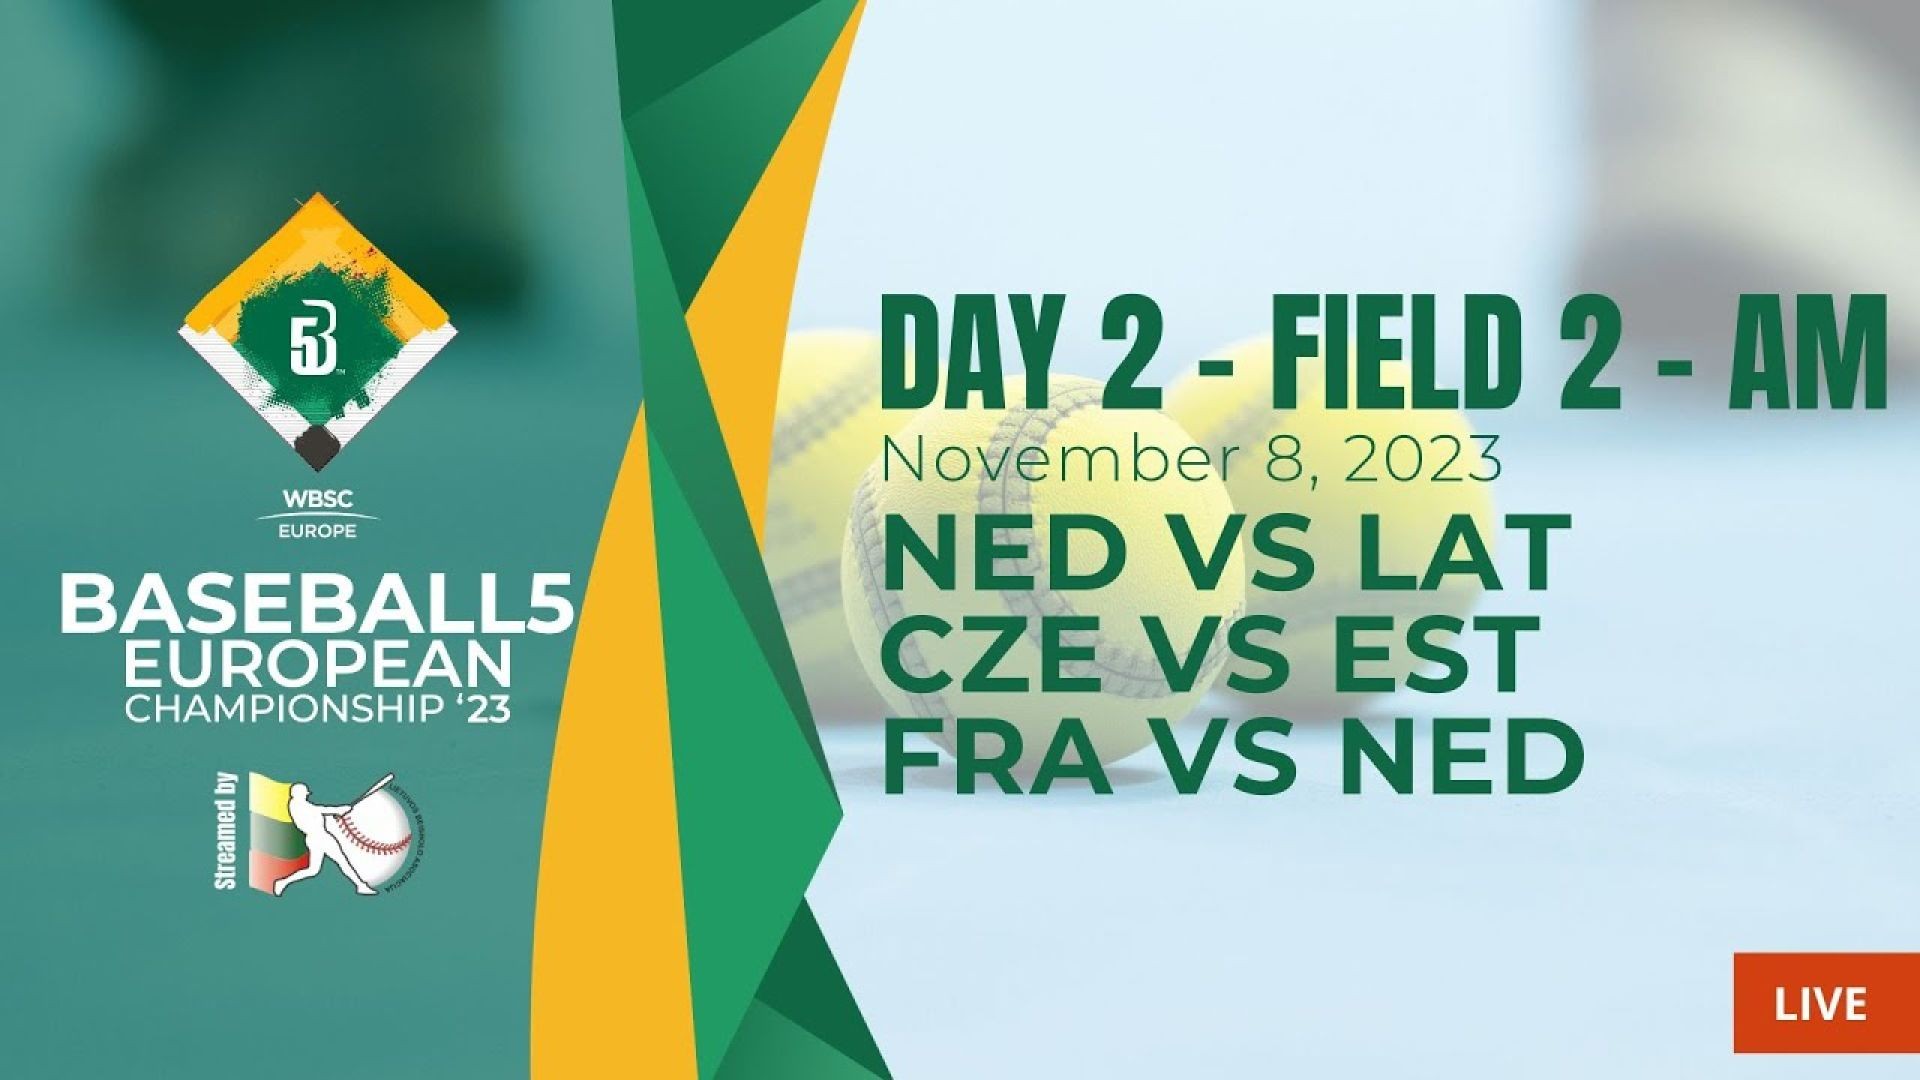 Baseball5 European Championship 2023: Field 2 - Day 2 - Morning Games